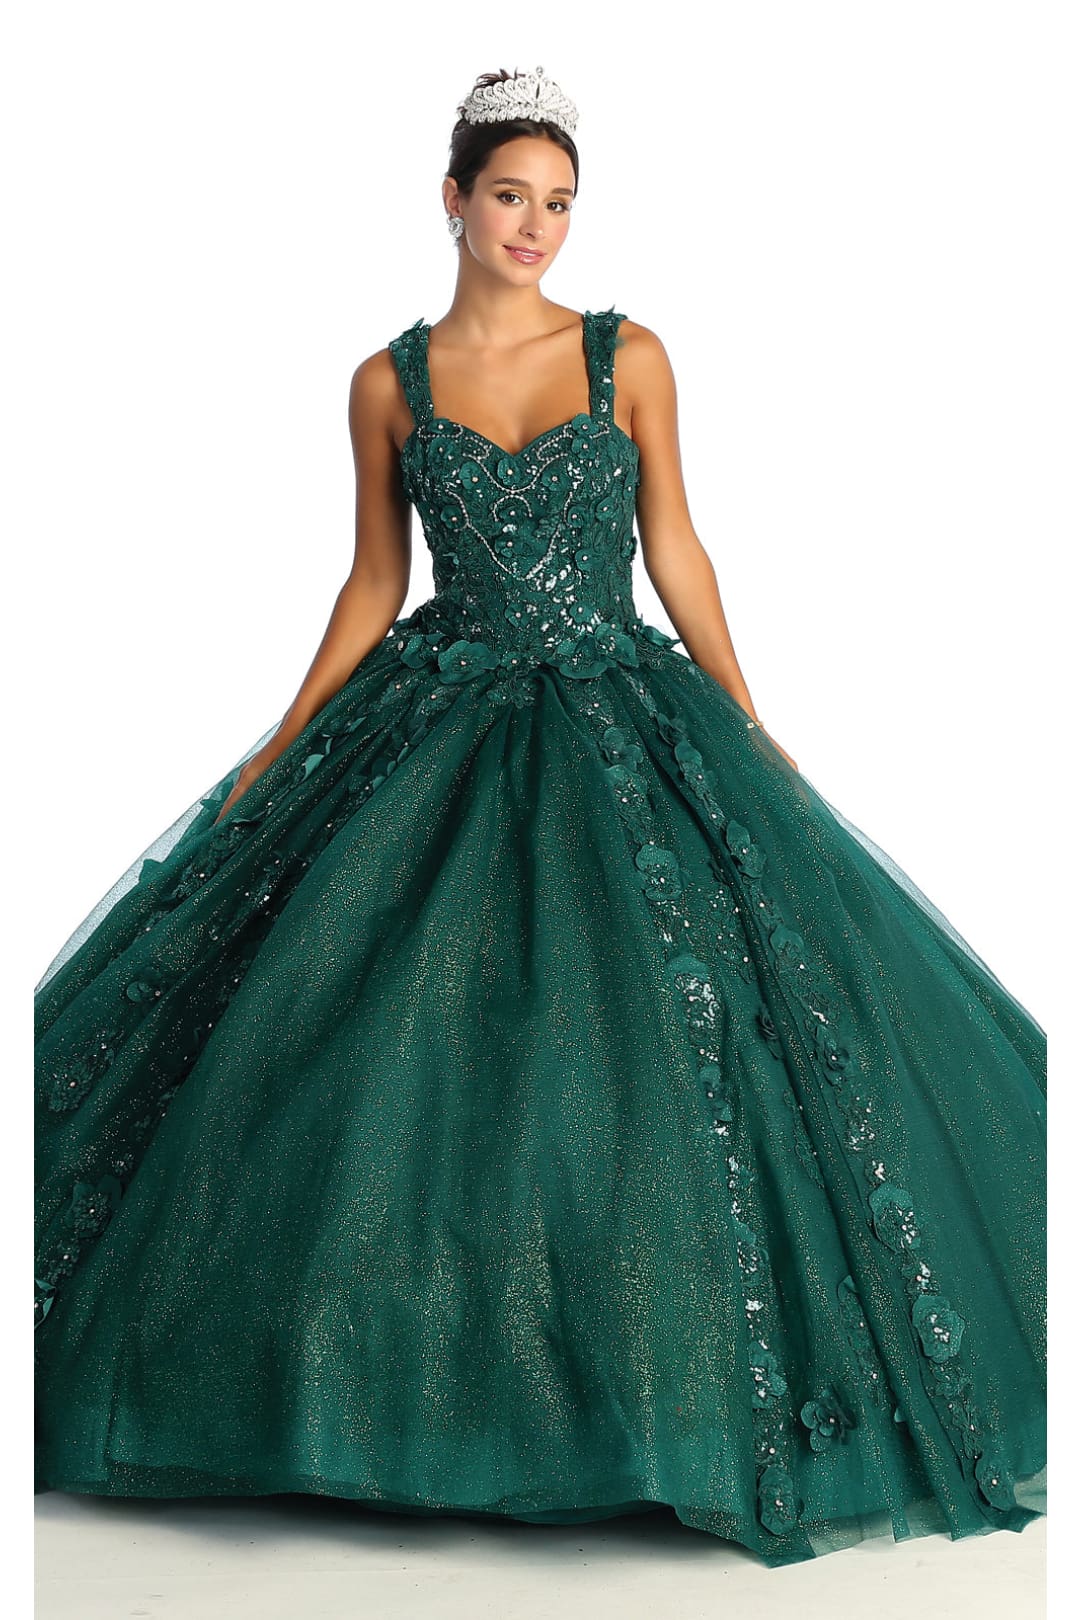 Plus Size Quinceanera Ball Gown - LA171 - HUNTER GREEN - LA Merchandise